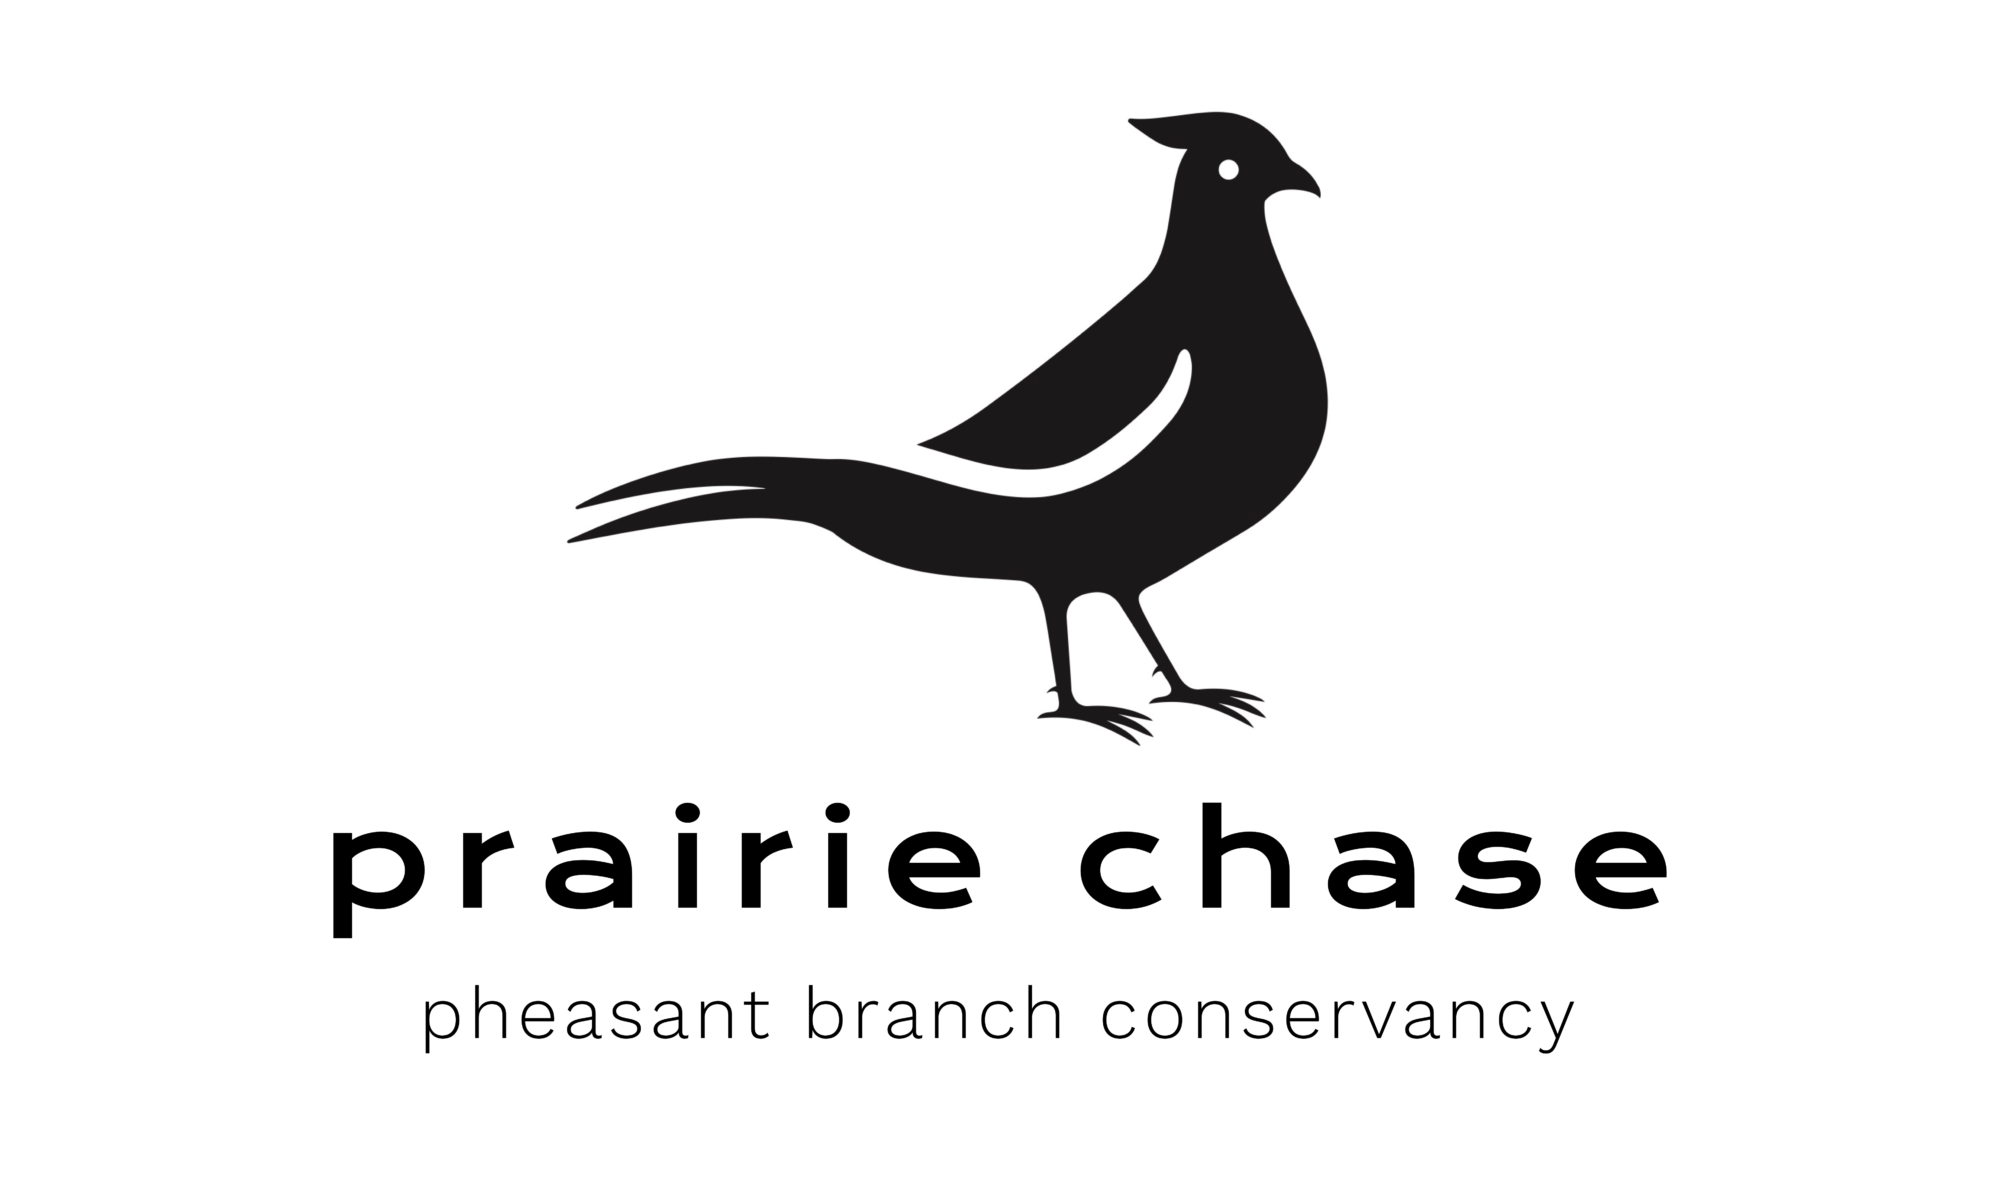 2020 prairie chase logo